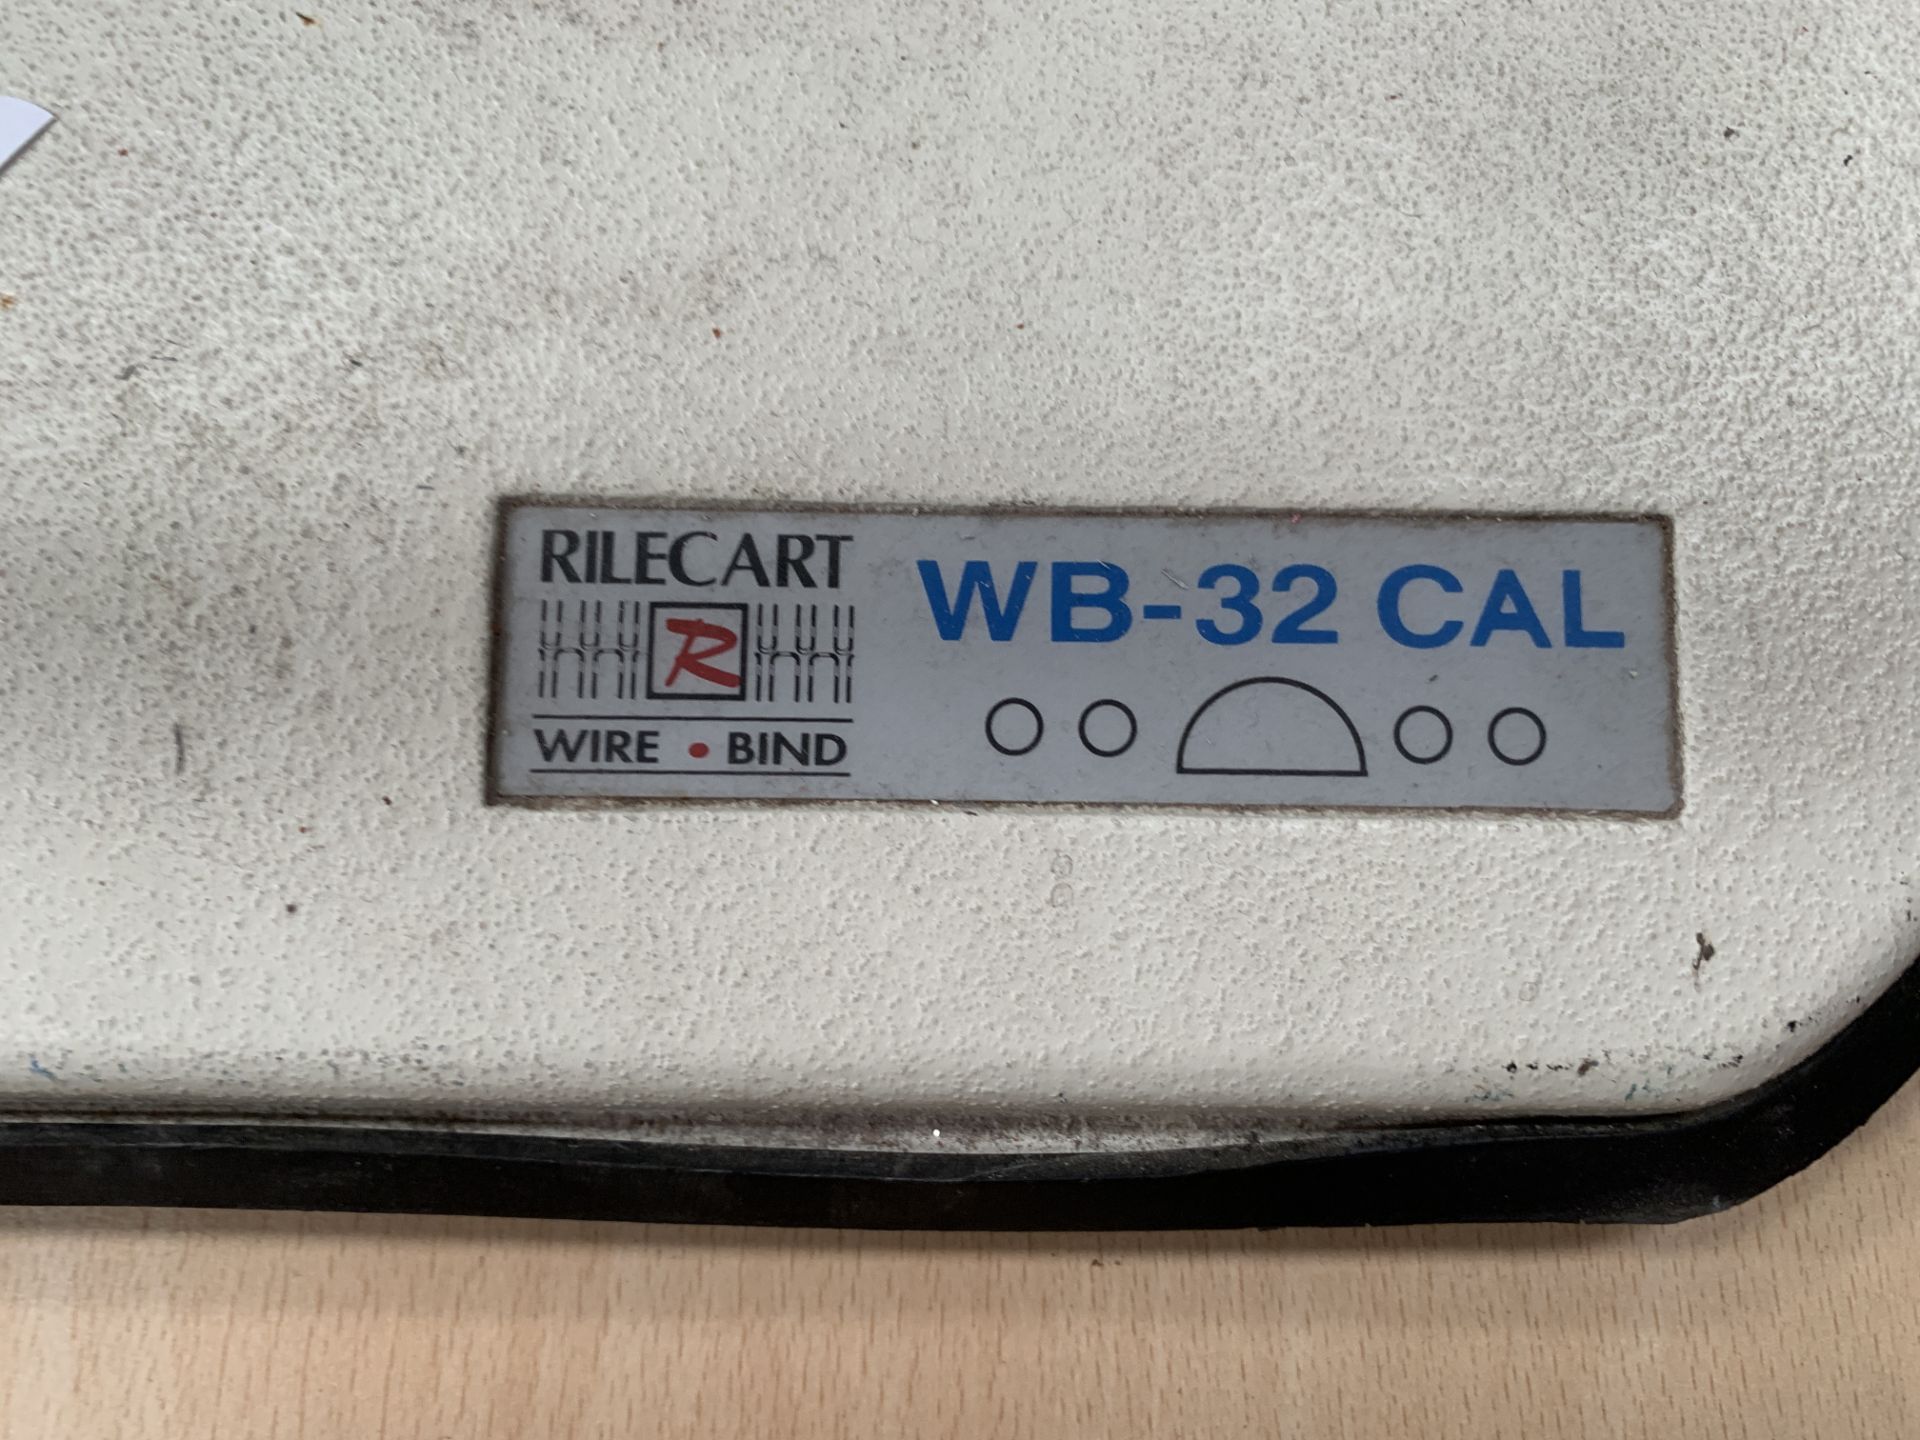 Rilecart WB-32 Calendar Wire & Binder - Image 2 of 3